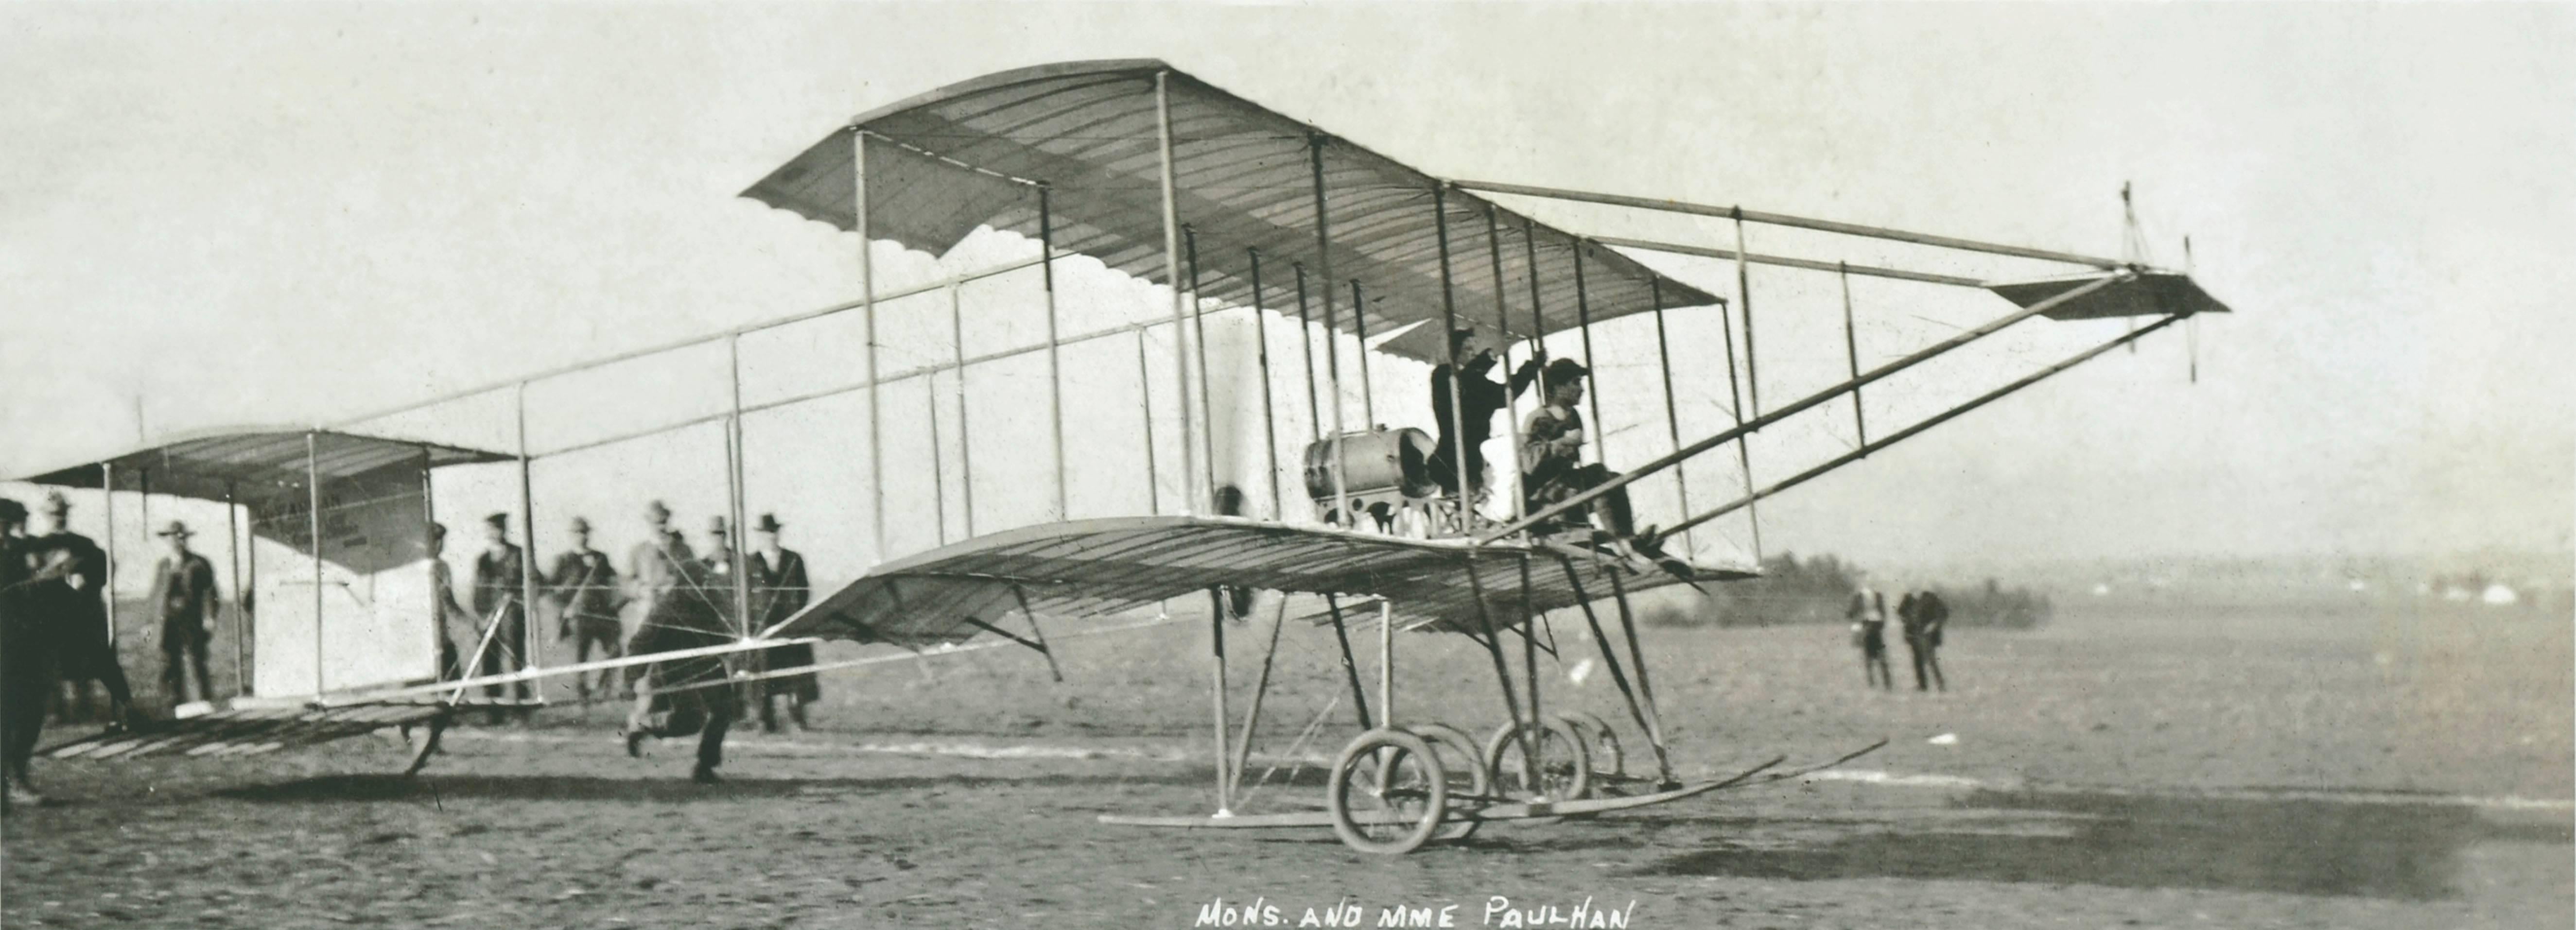 Madame Paulhan Fly a Farman Airship 1910 Los Angeles Int. Flugschau  (Beige), Black and White Photograph, von Roy Christian